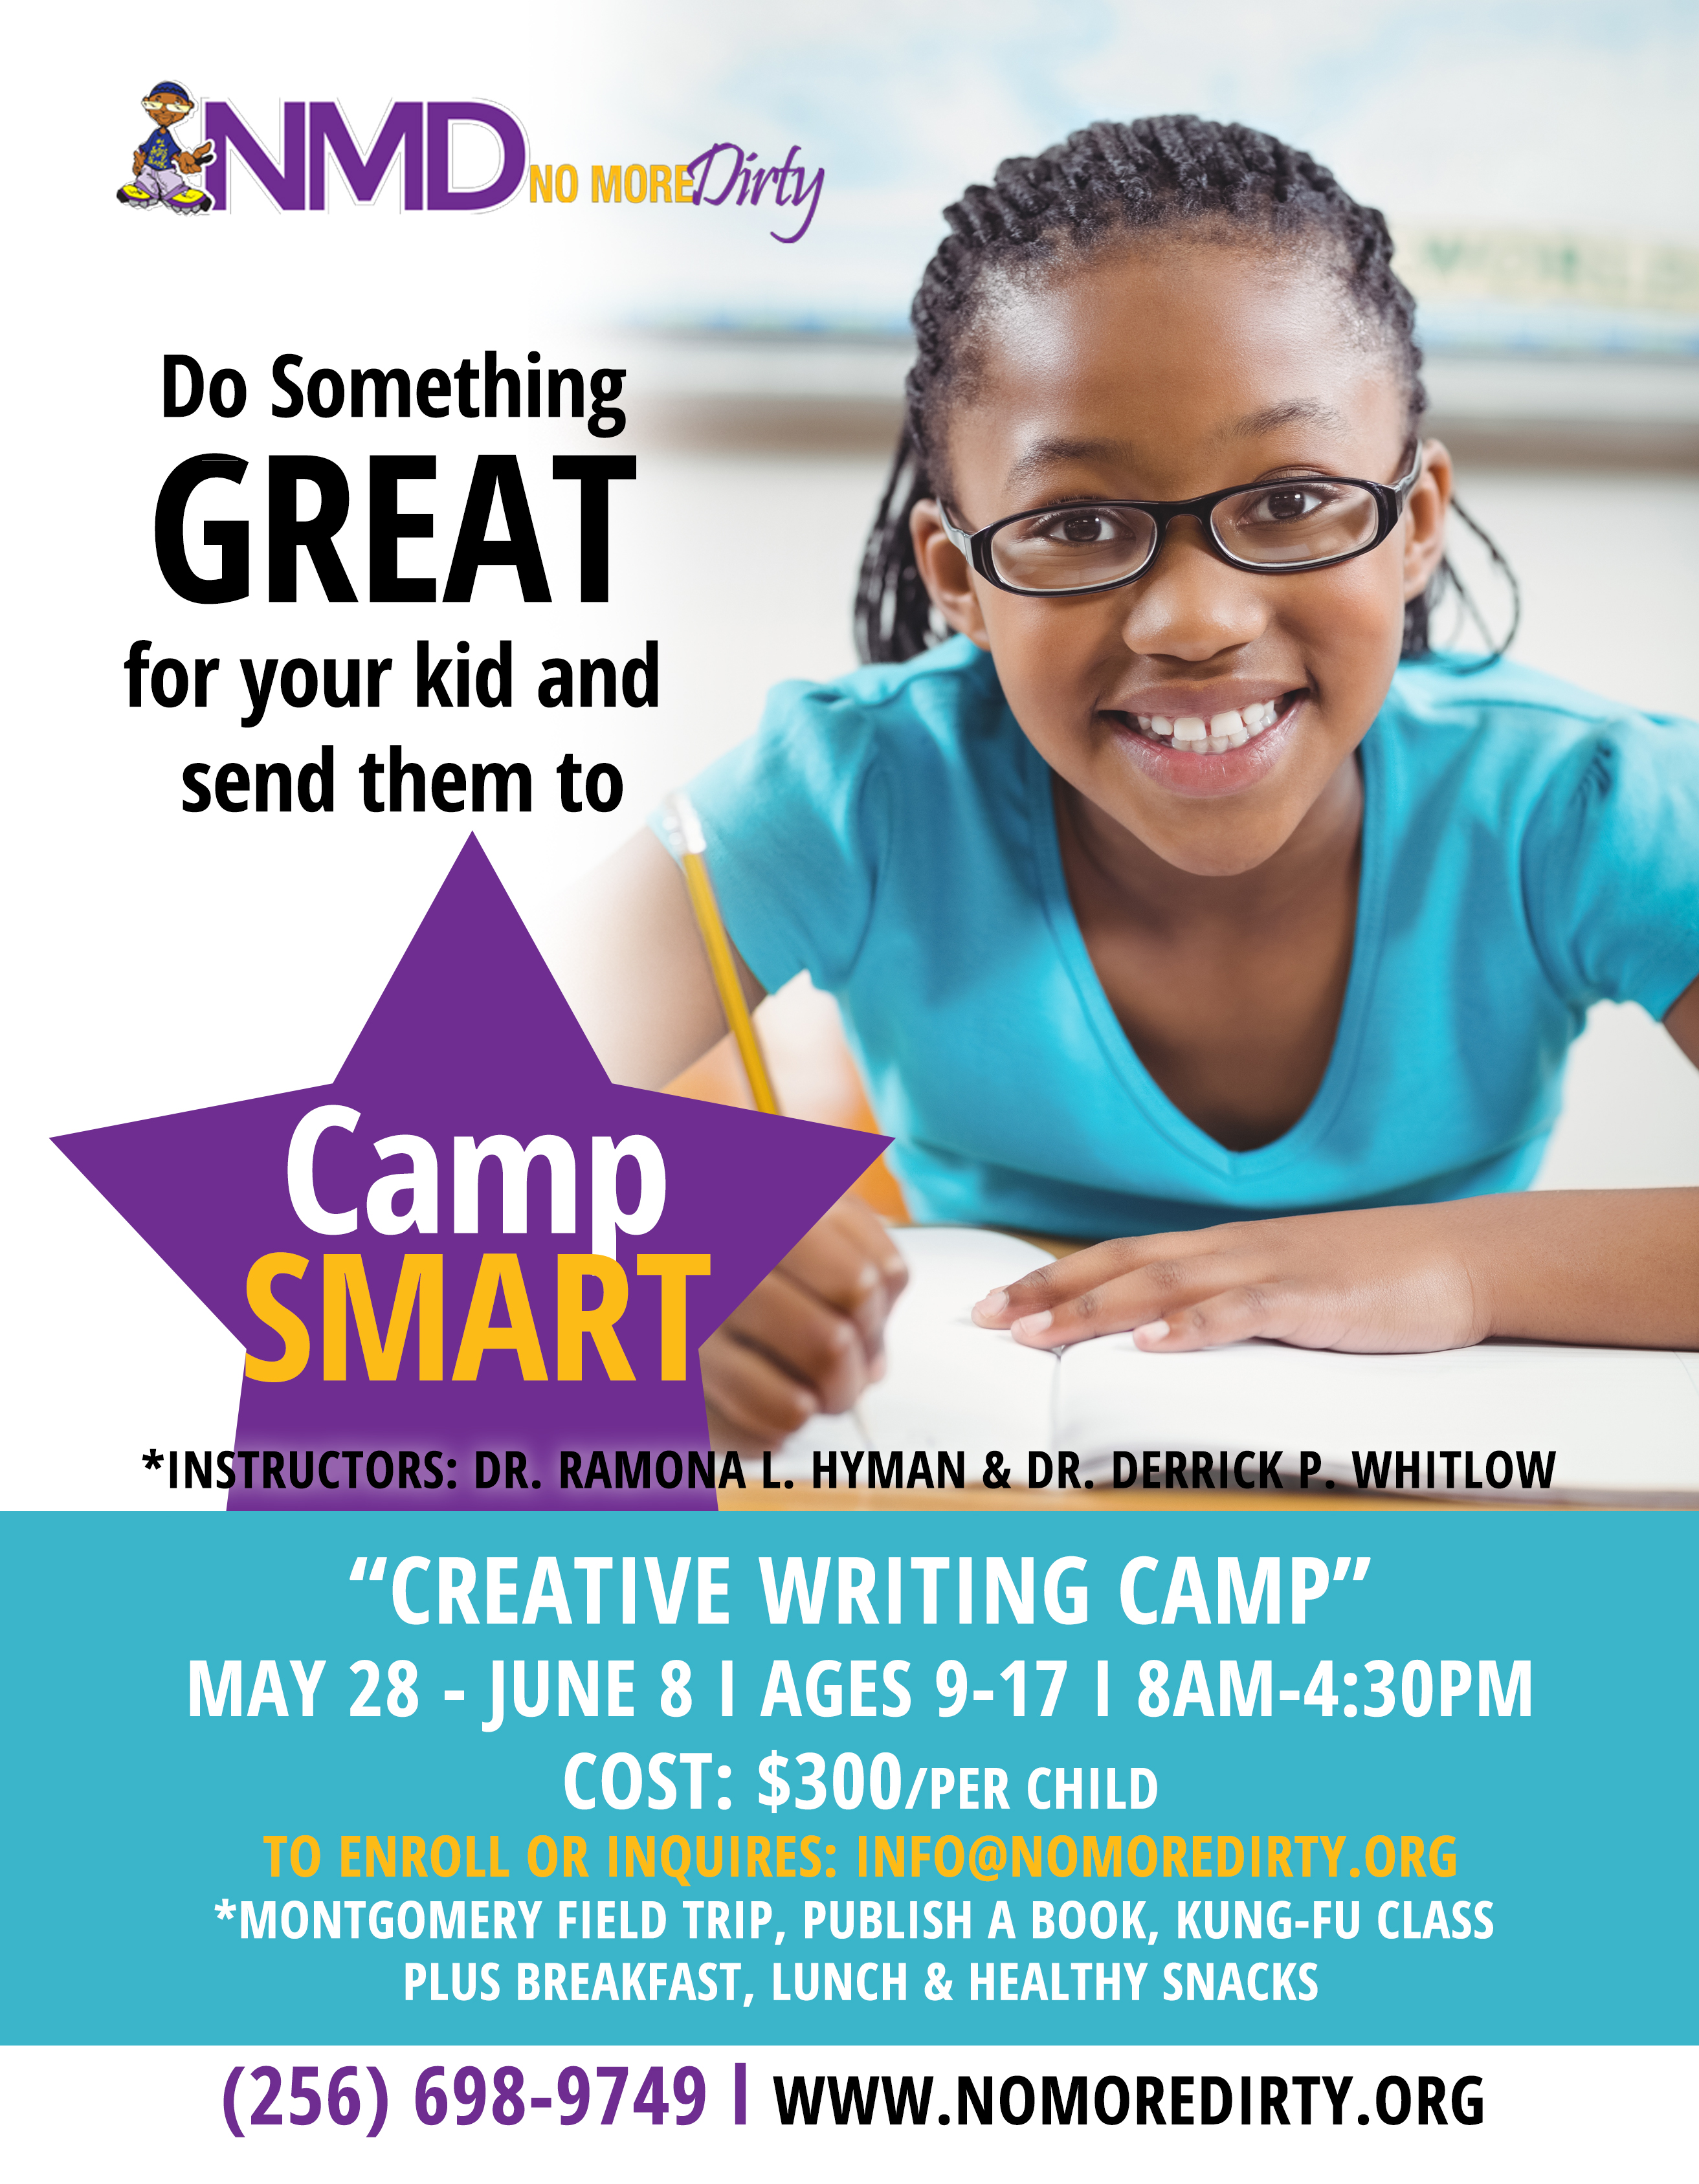 No More Dirty: CampSmart "Creative Writing Camp"